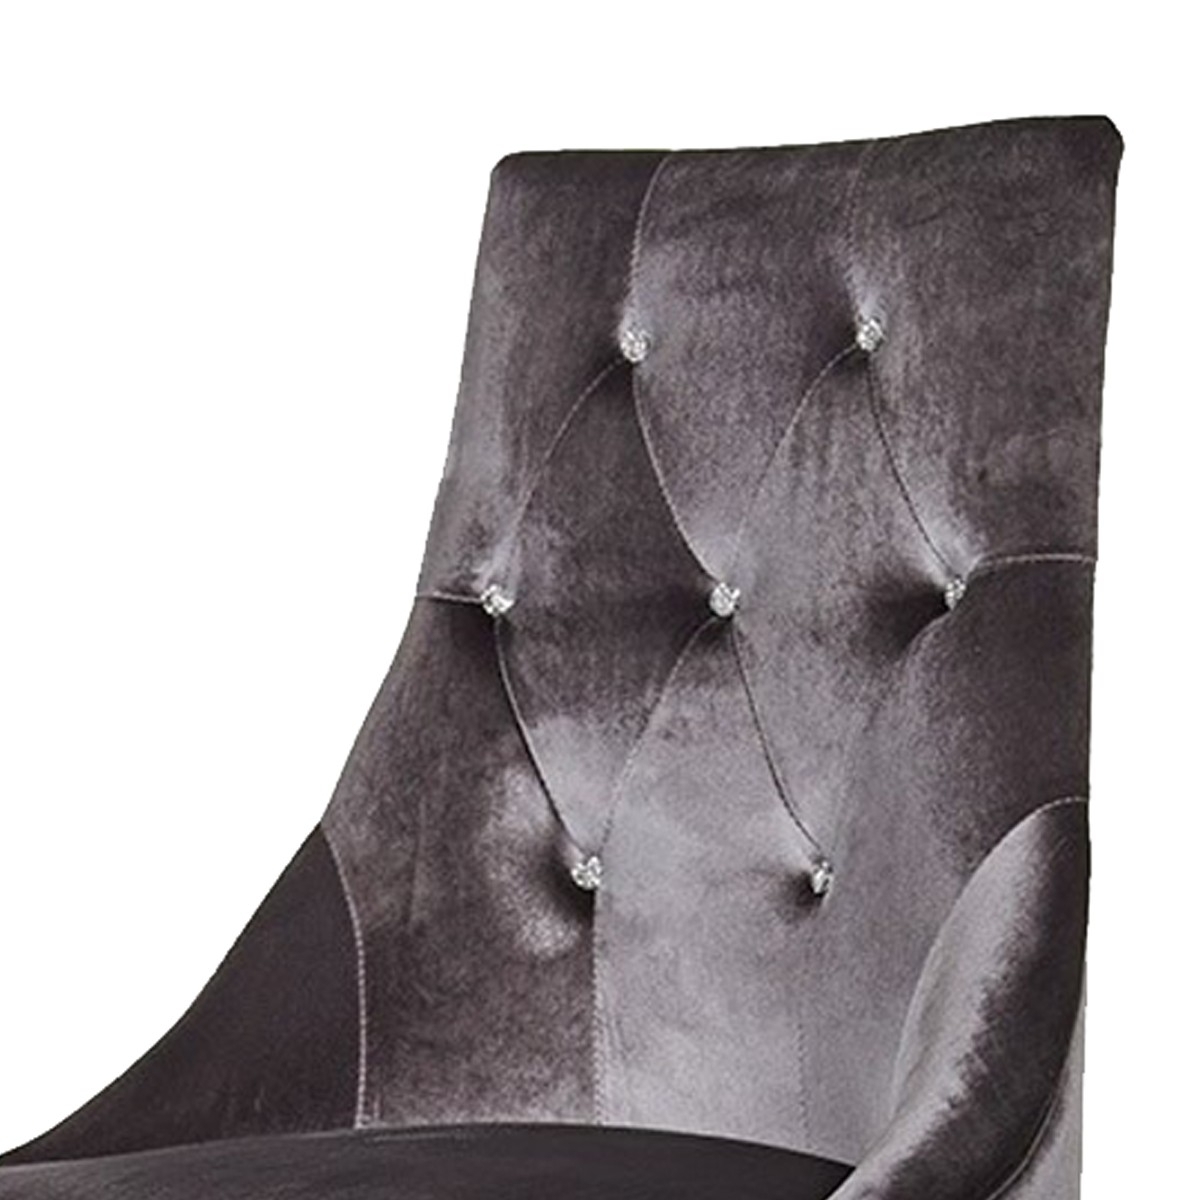 Fabric Sloped Back Dining Chair With Diamond Tufting, Set Of 2, Gray- Saltoro Sherpi